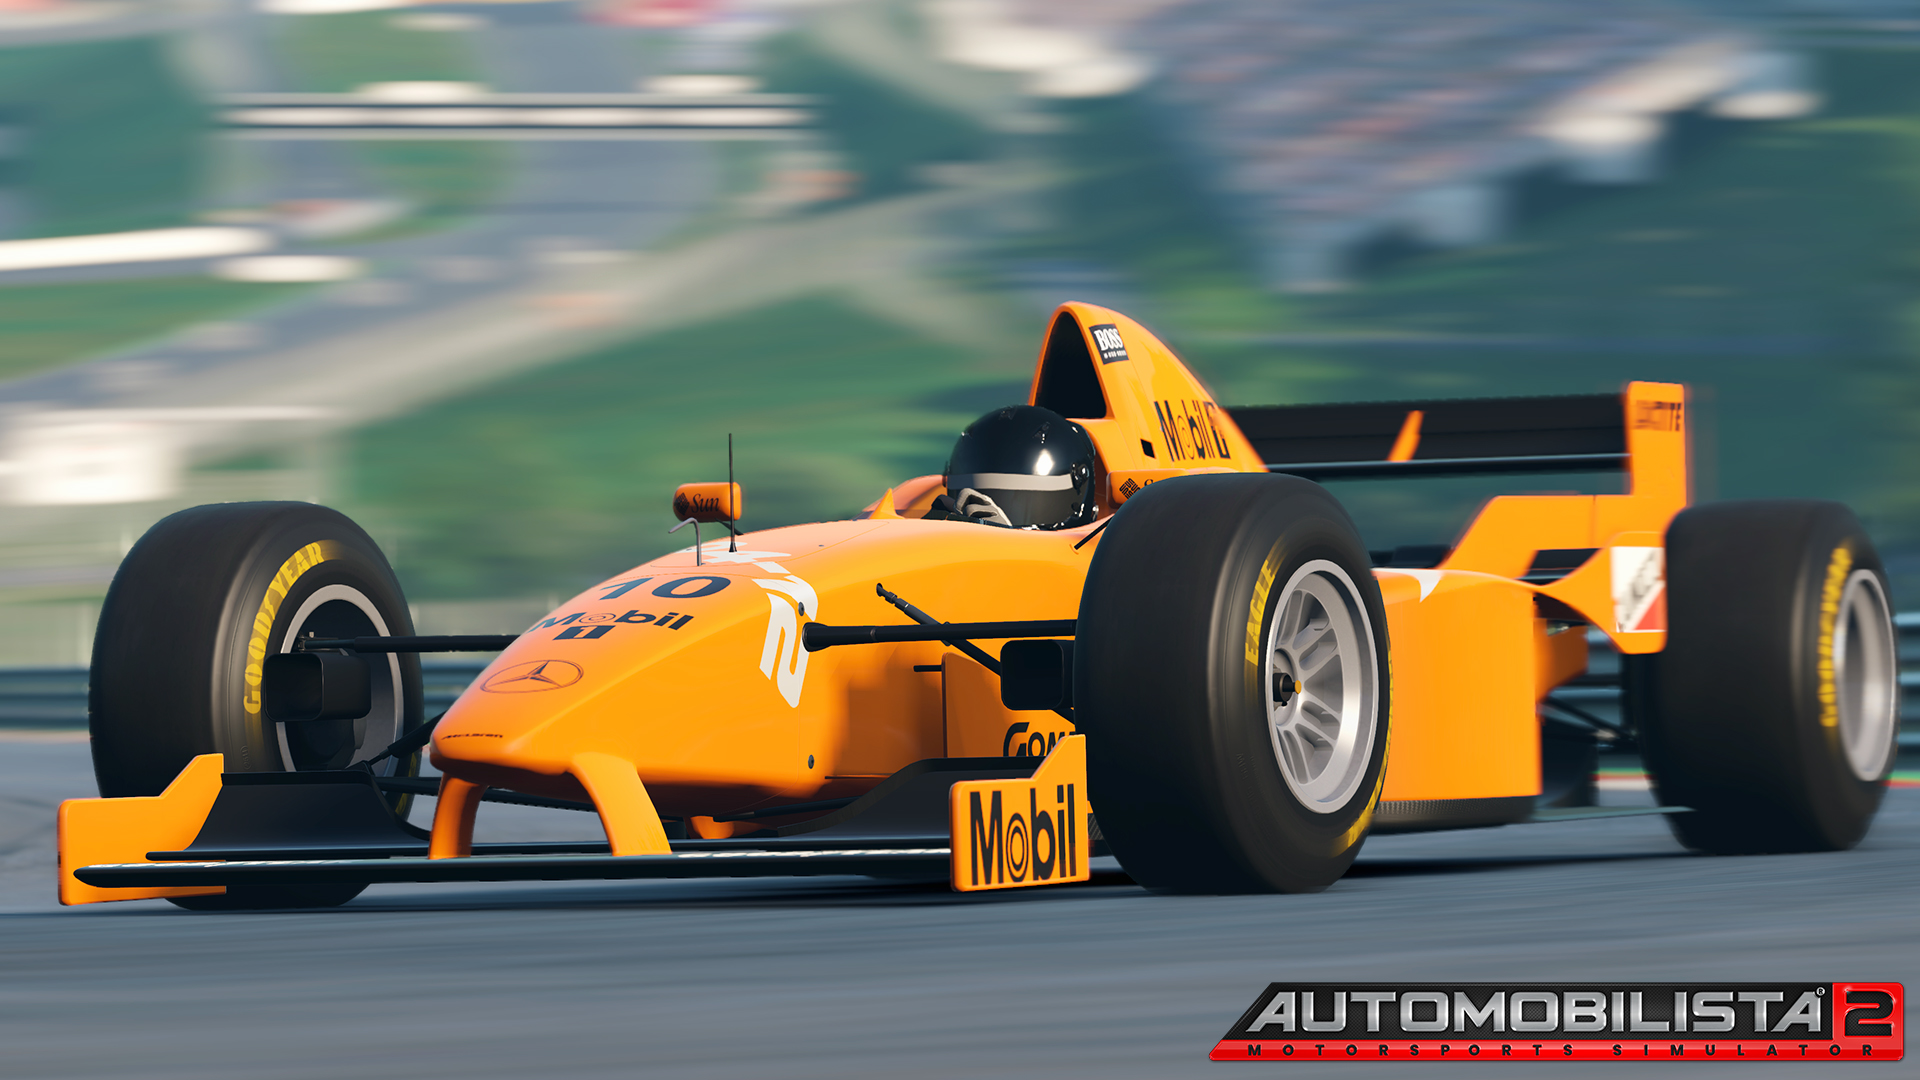 More information about "Automobilista 2: nuovo update v1.0.2.7 disponibile"